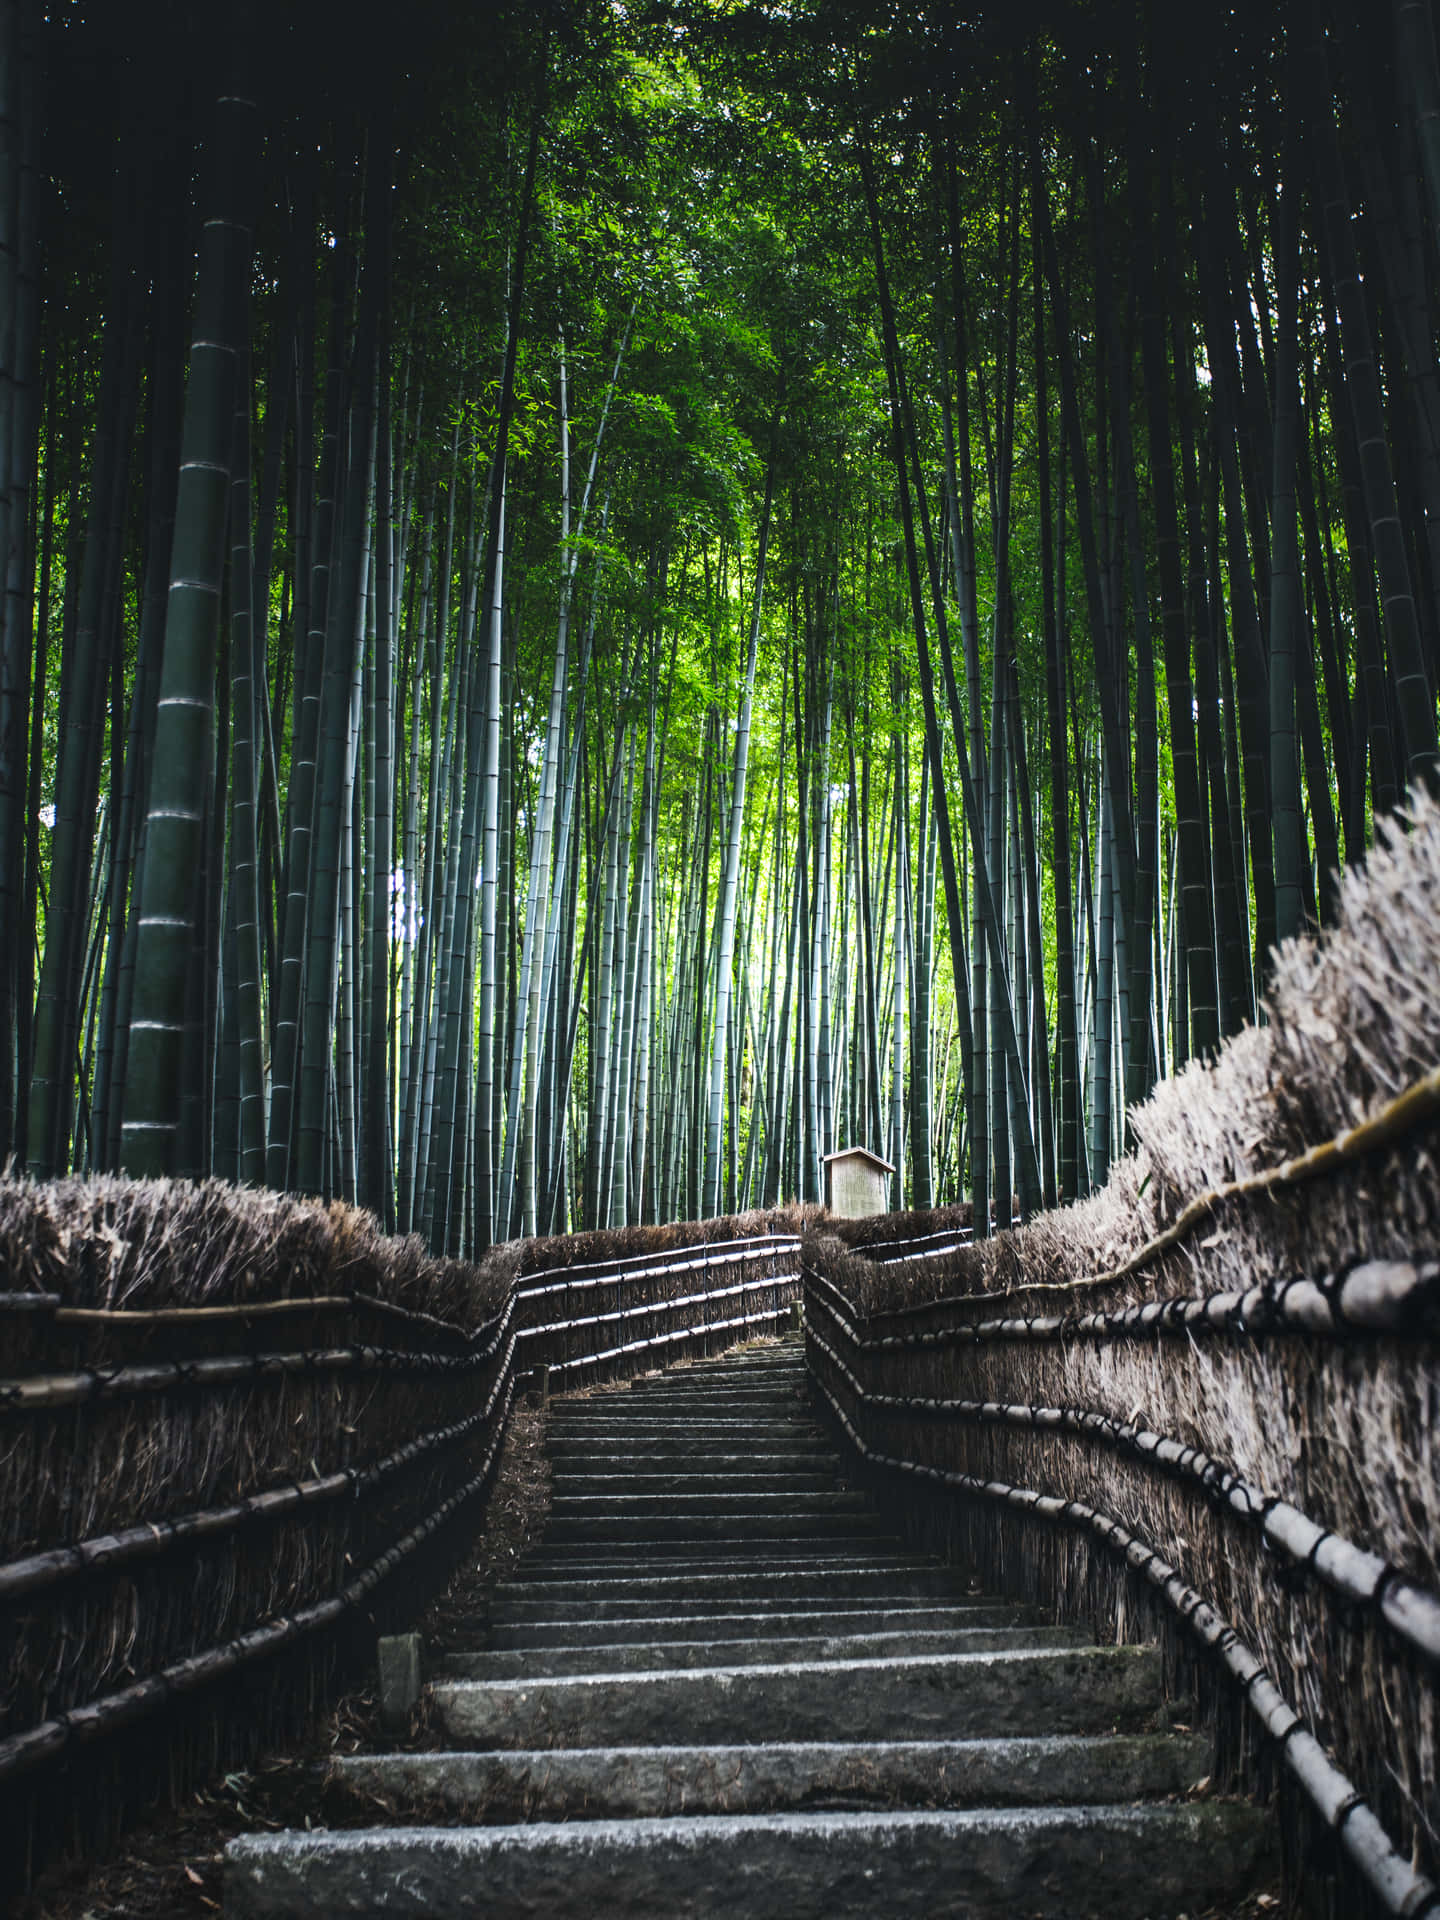 Bambuswaldtreppenweg Wallpaper